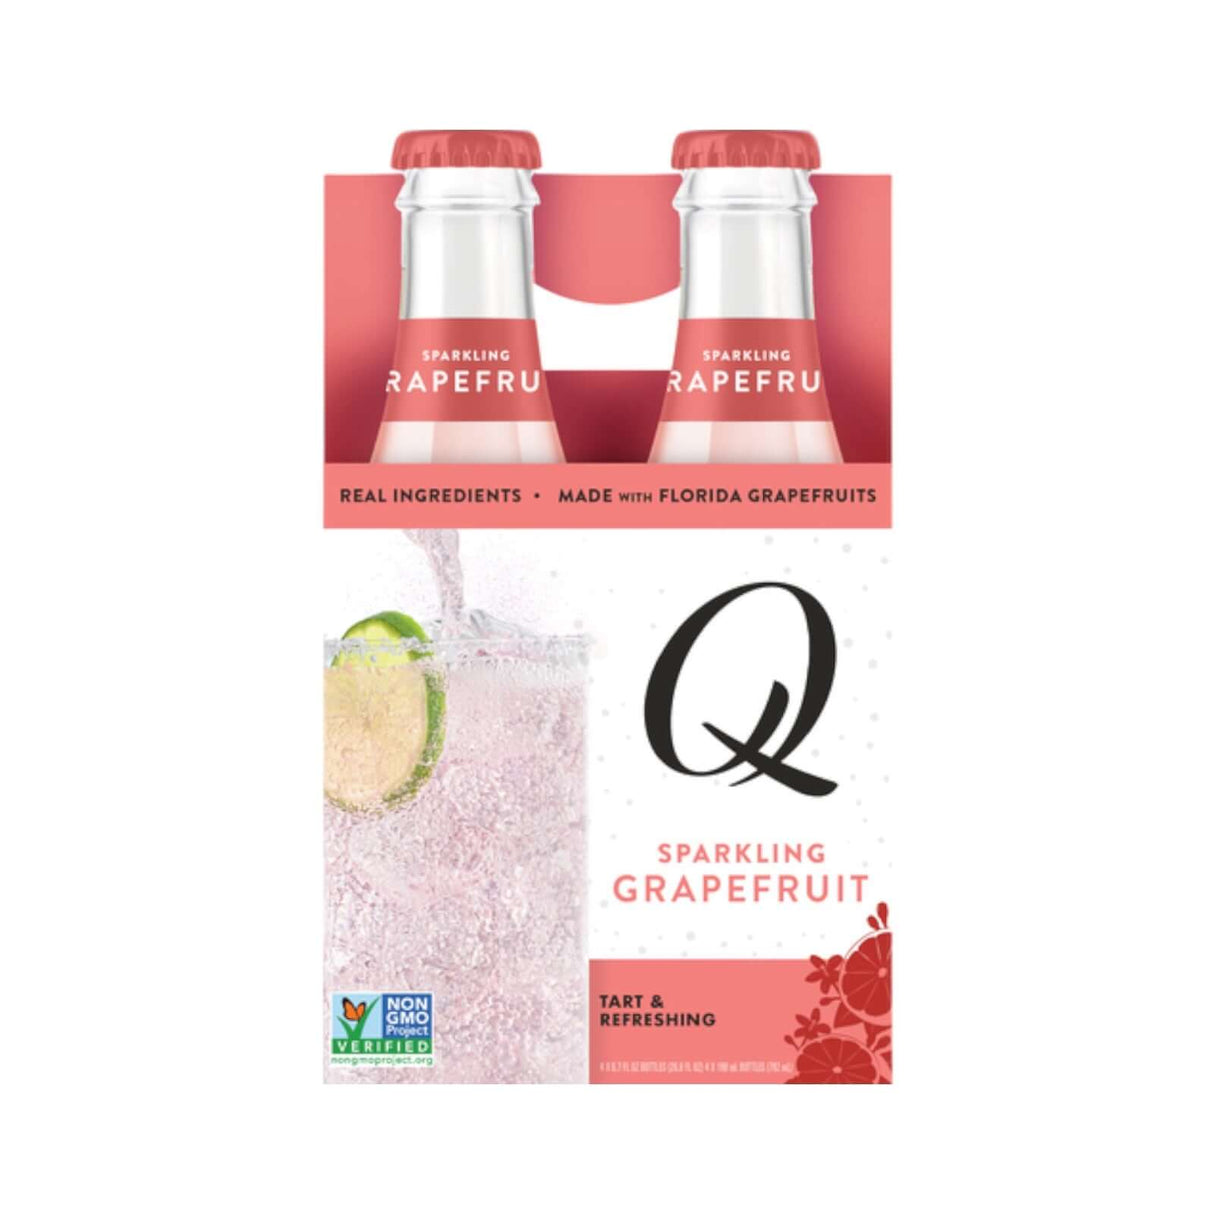 Q Sparkling Grapefruit